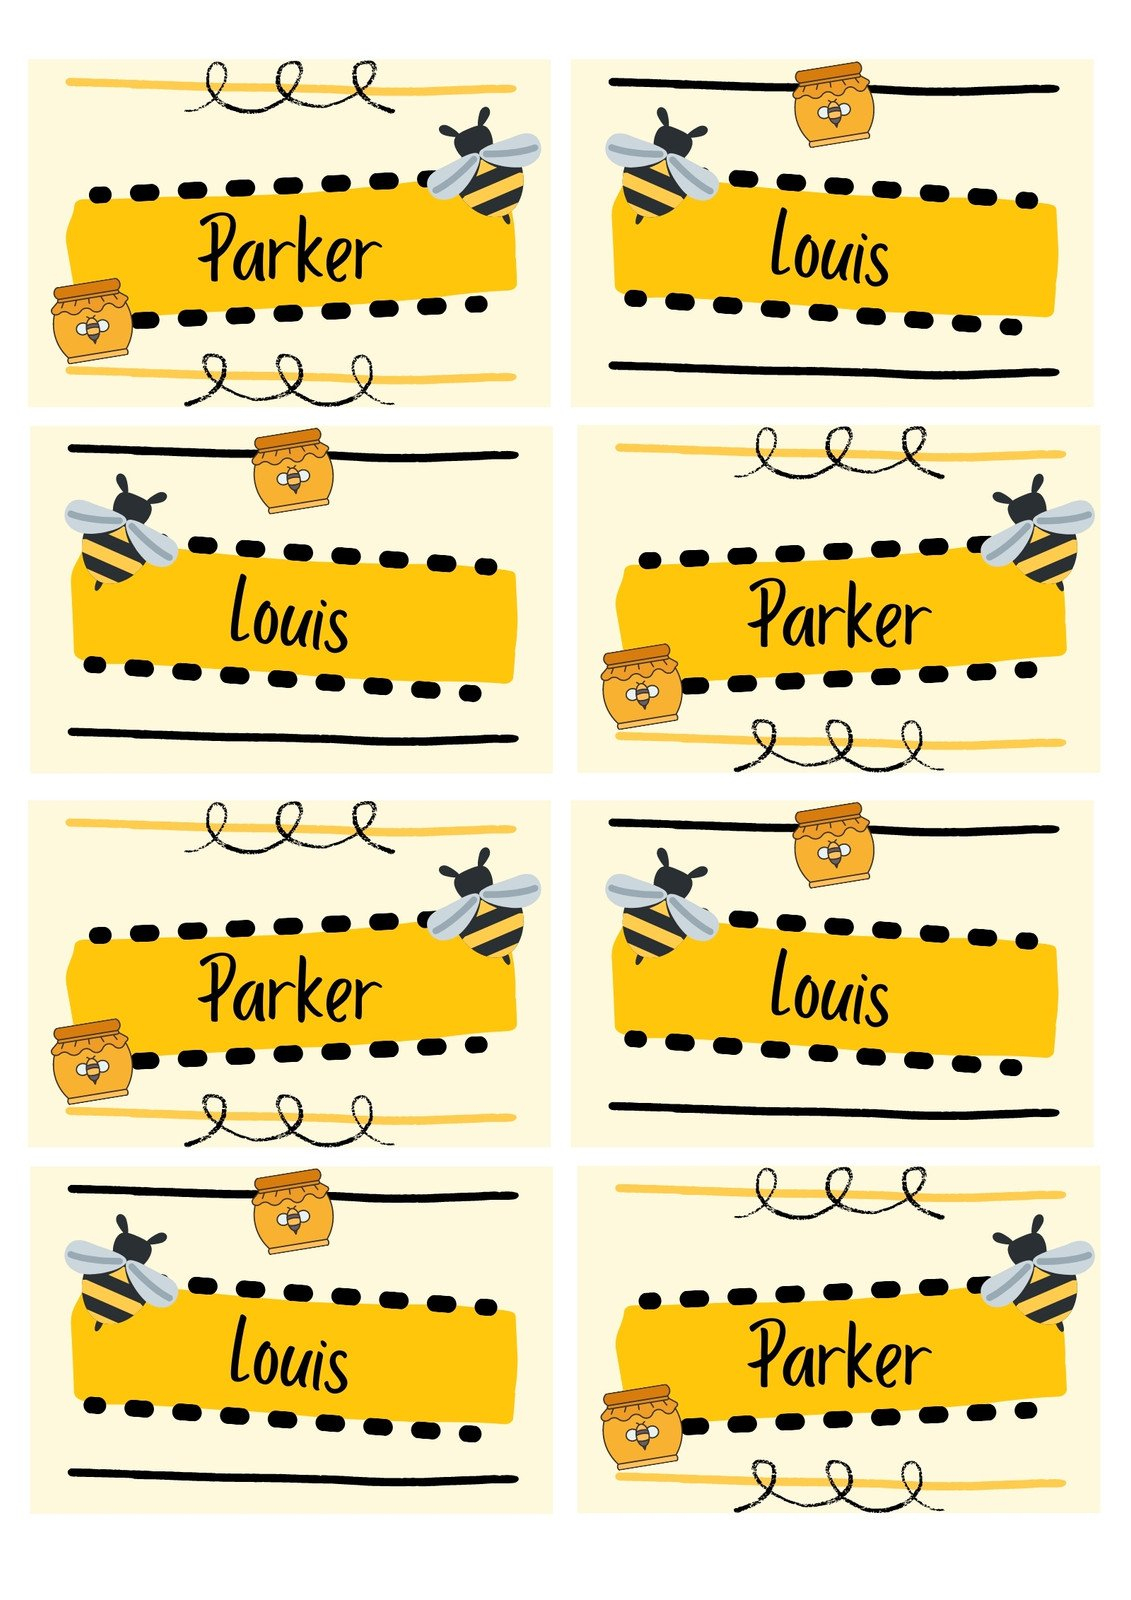 Free And Customizable Bee Templates - Free Printable Bee Name Tags